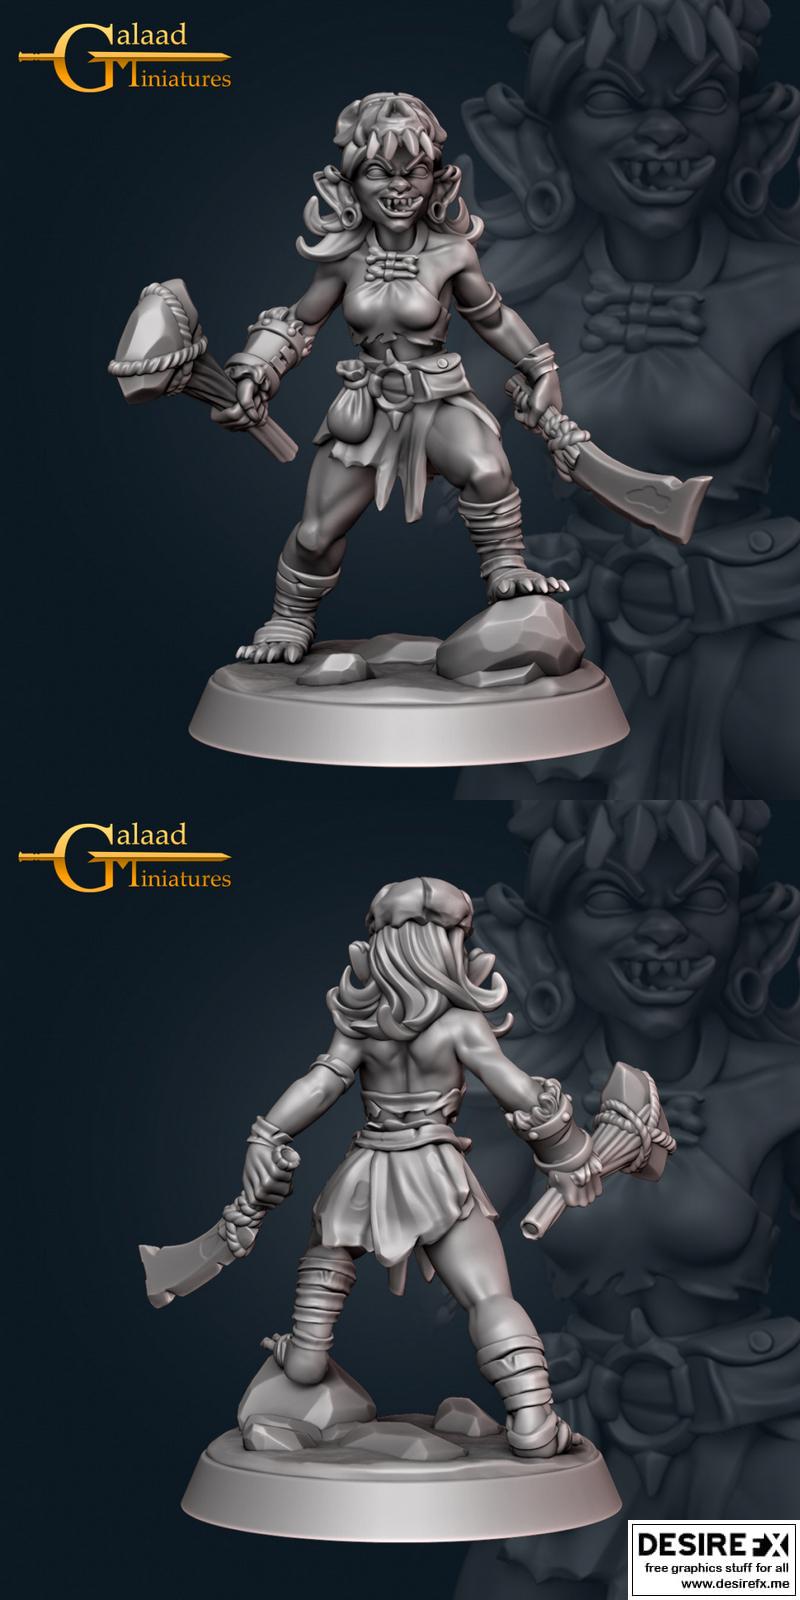 Desire FX 3d models | Galaad Miniatures – Female Goblin Fighter 02 – 3D ...